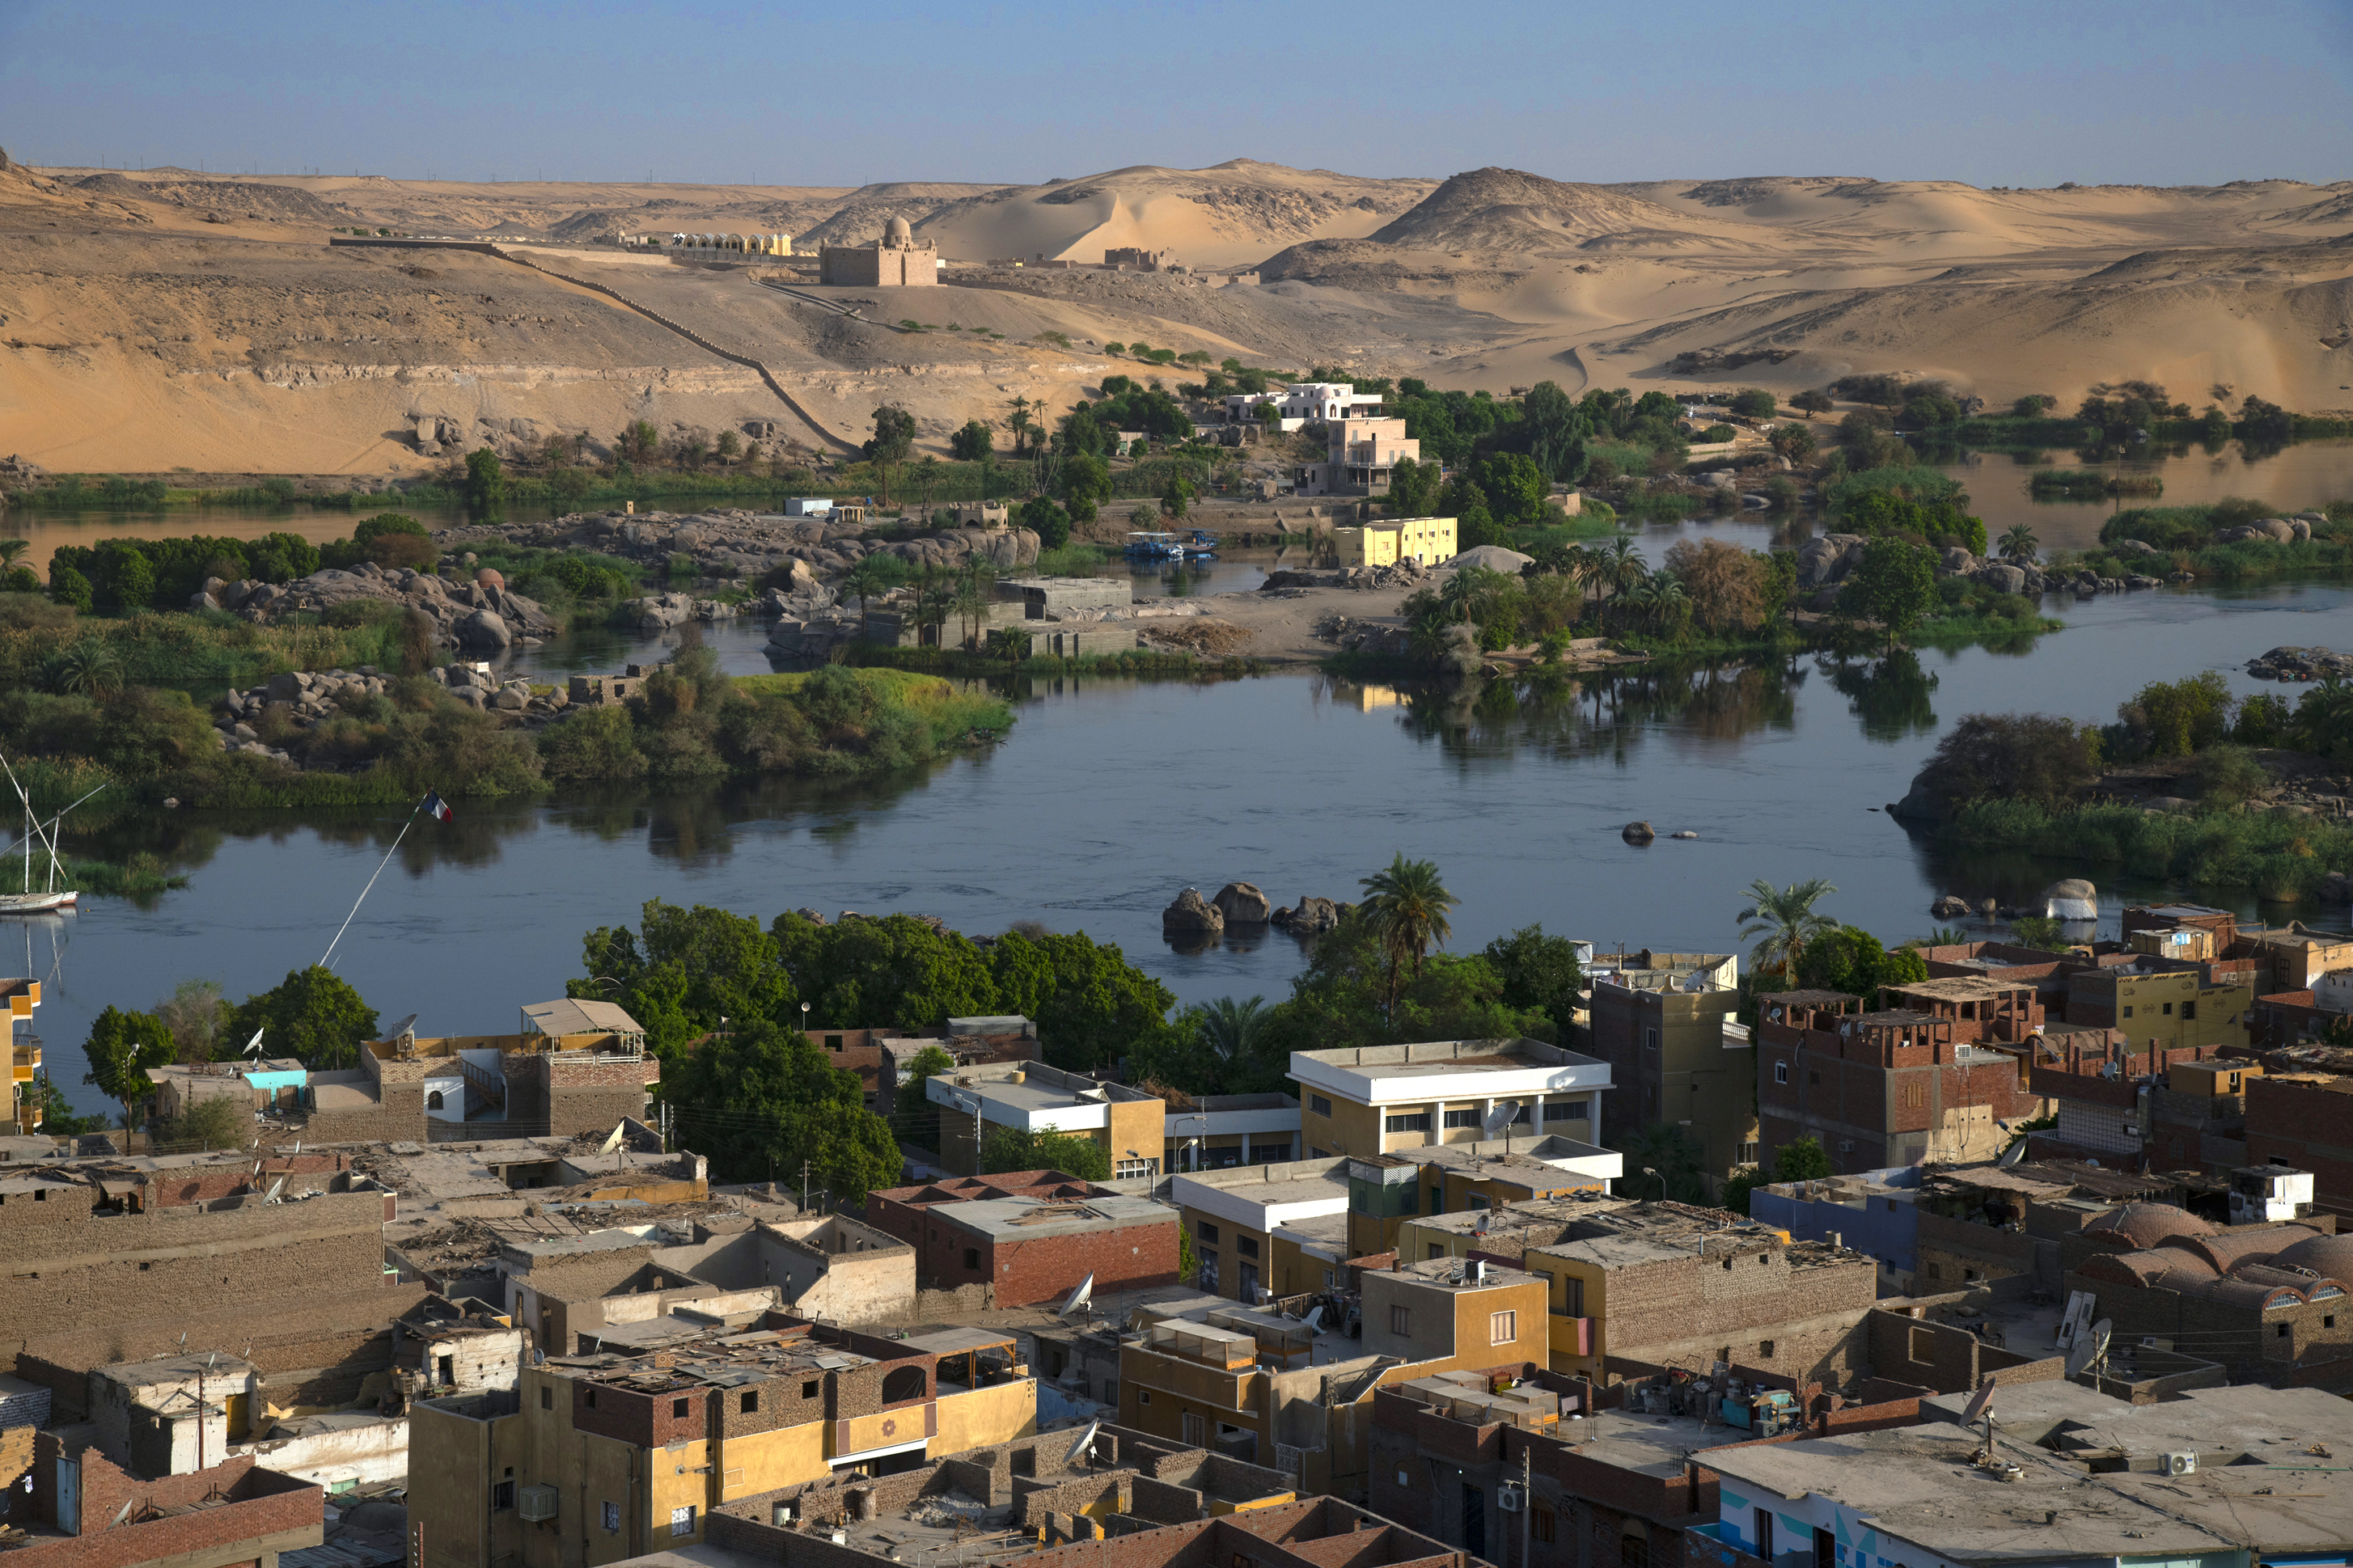 View of Aswan, Egypt. Photo by Scott Bennett